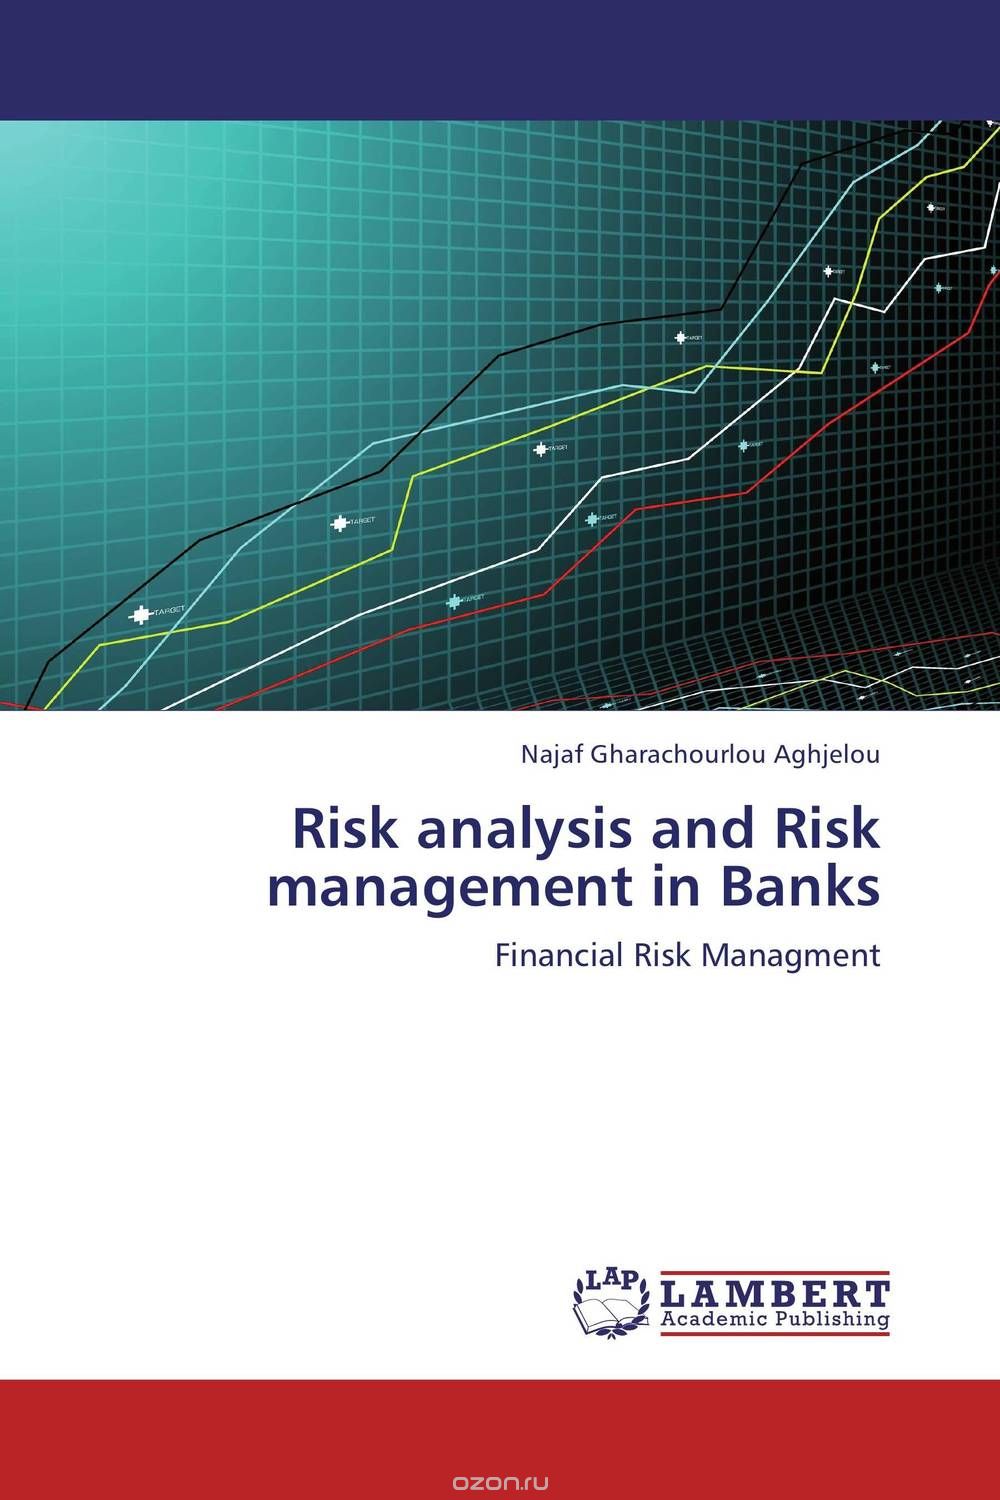 Скачать книгу "Risk analysis and Risk management in  Banks"